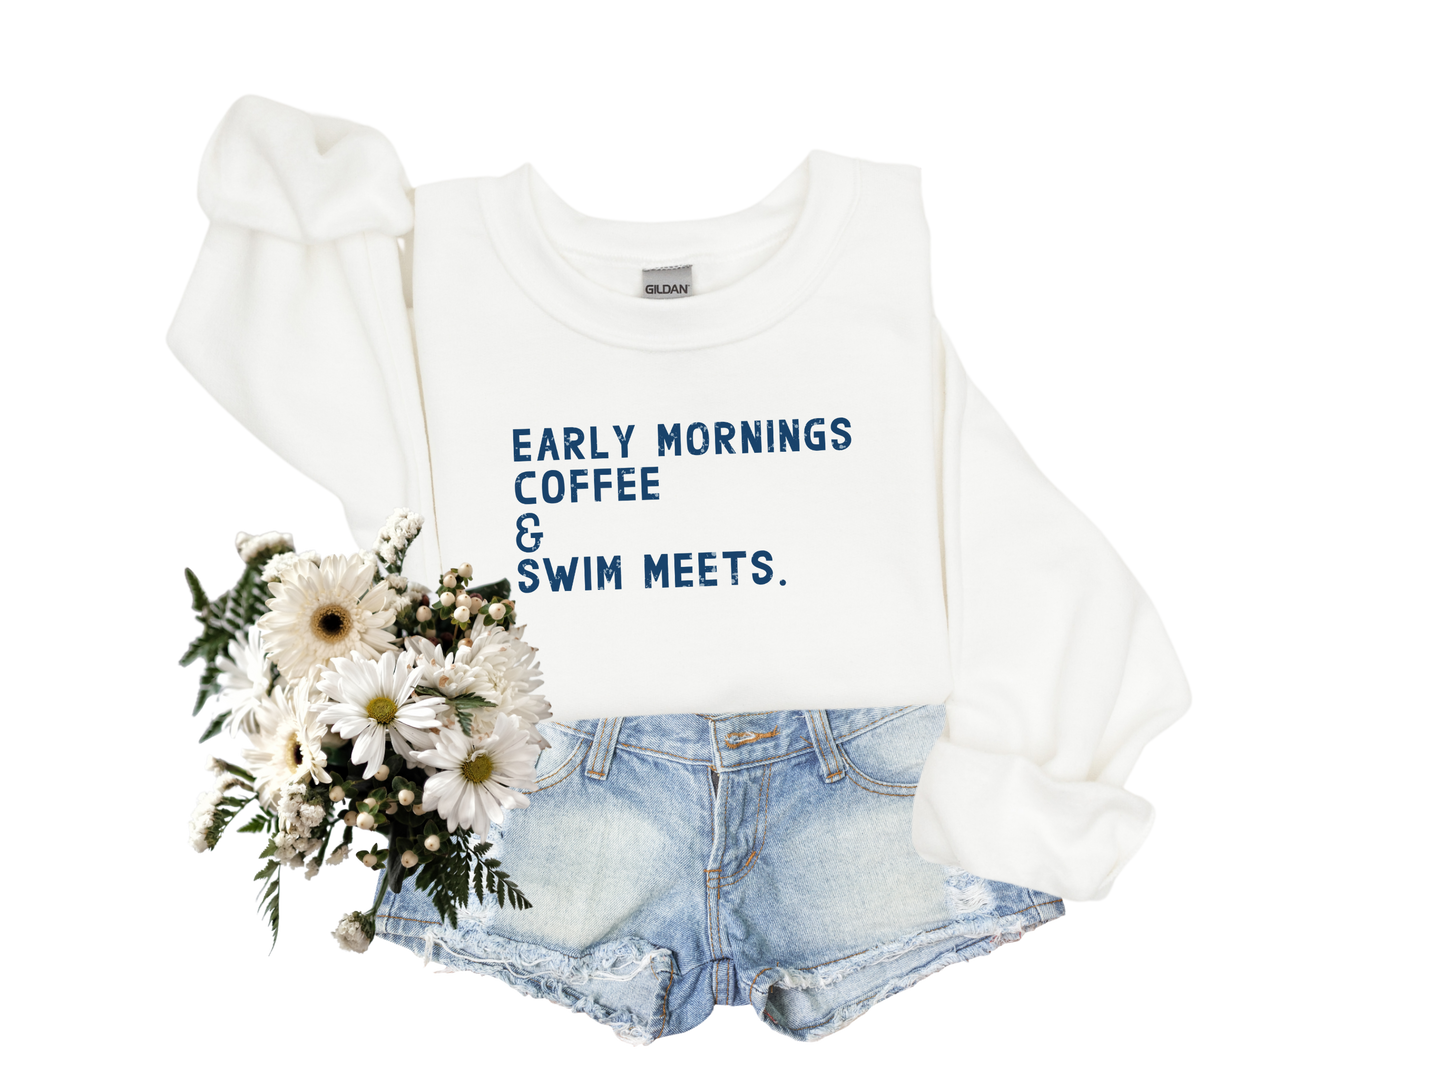 Early Mornings, Coffee & Swim Meets.